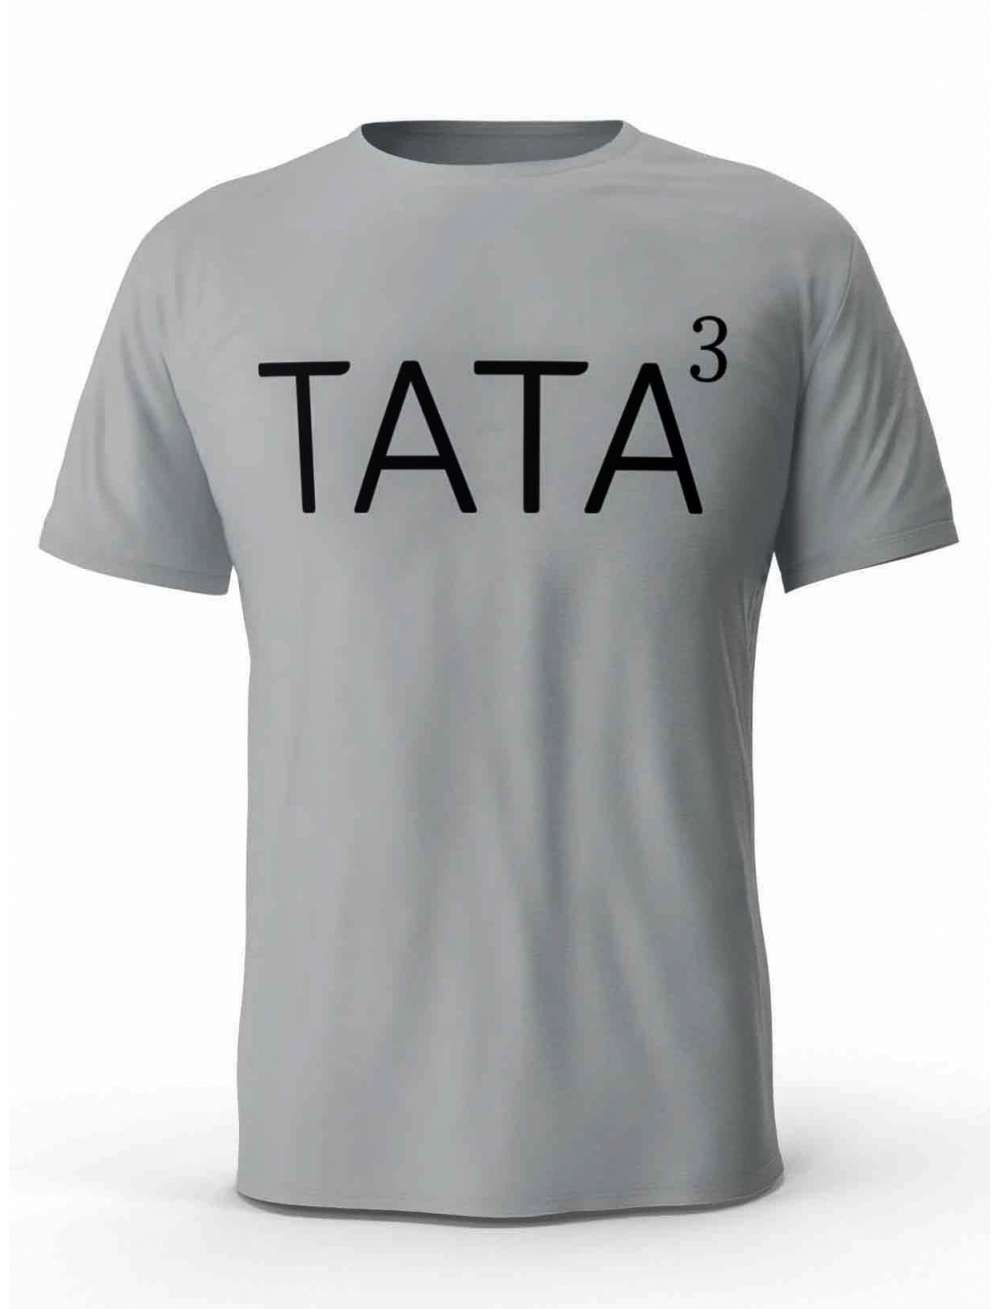 Koszulka Tata 3, T-shirt Dla Taty